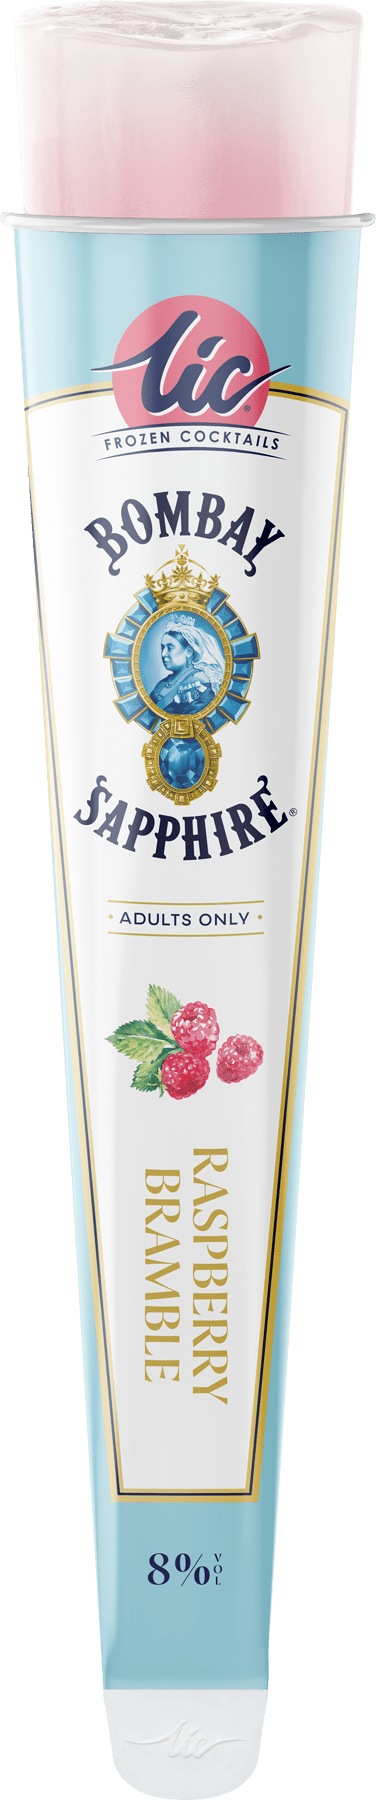 Raspberry Bramble: Bombay Sapphire